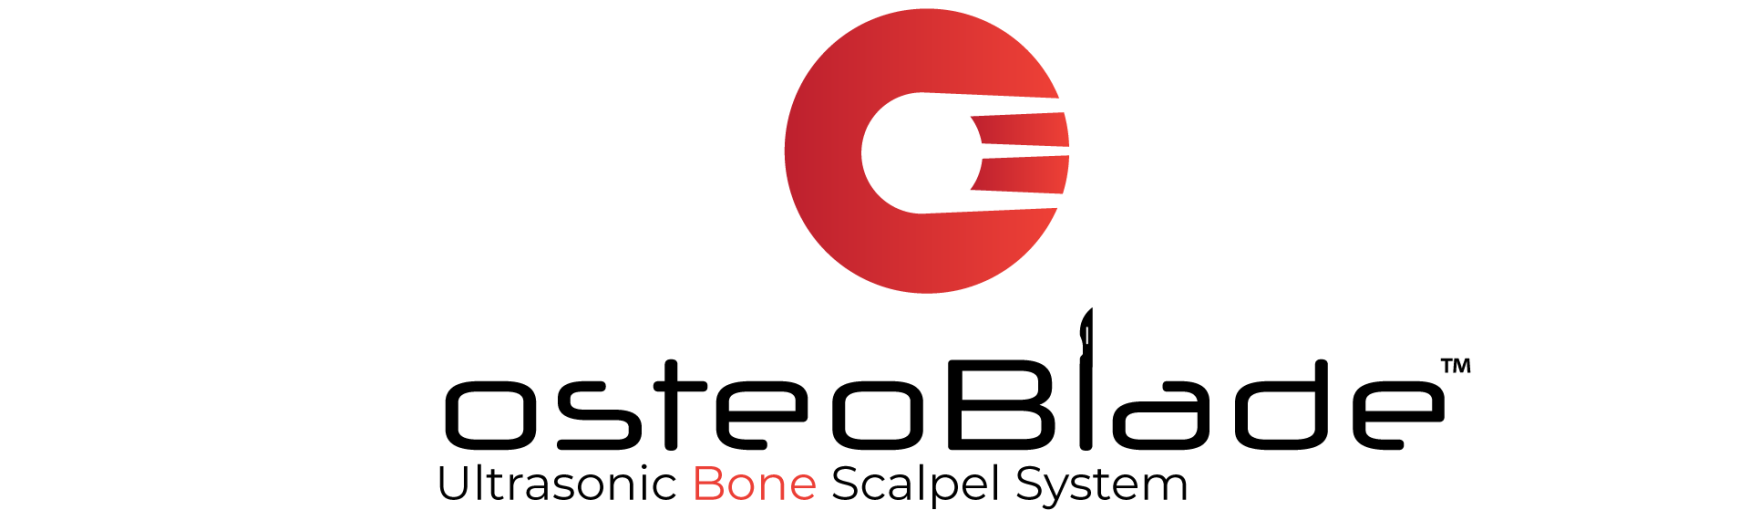 Osteoblade™ Ultrasonic Bone Scalpel System